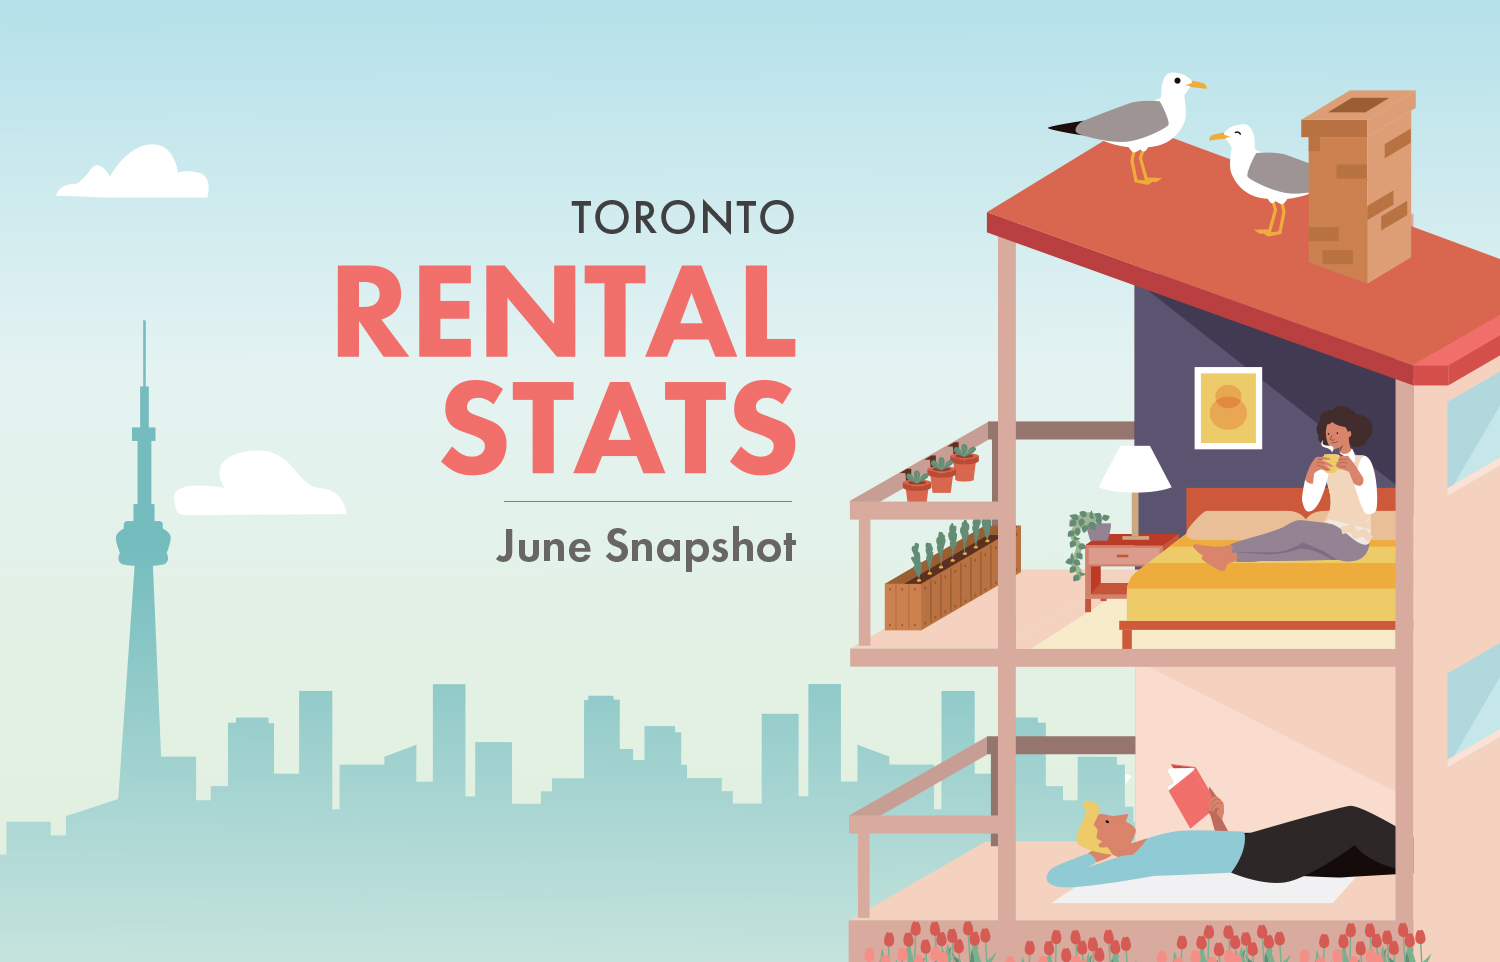 Toronto Rental Stats – June 2019 Snapshot